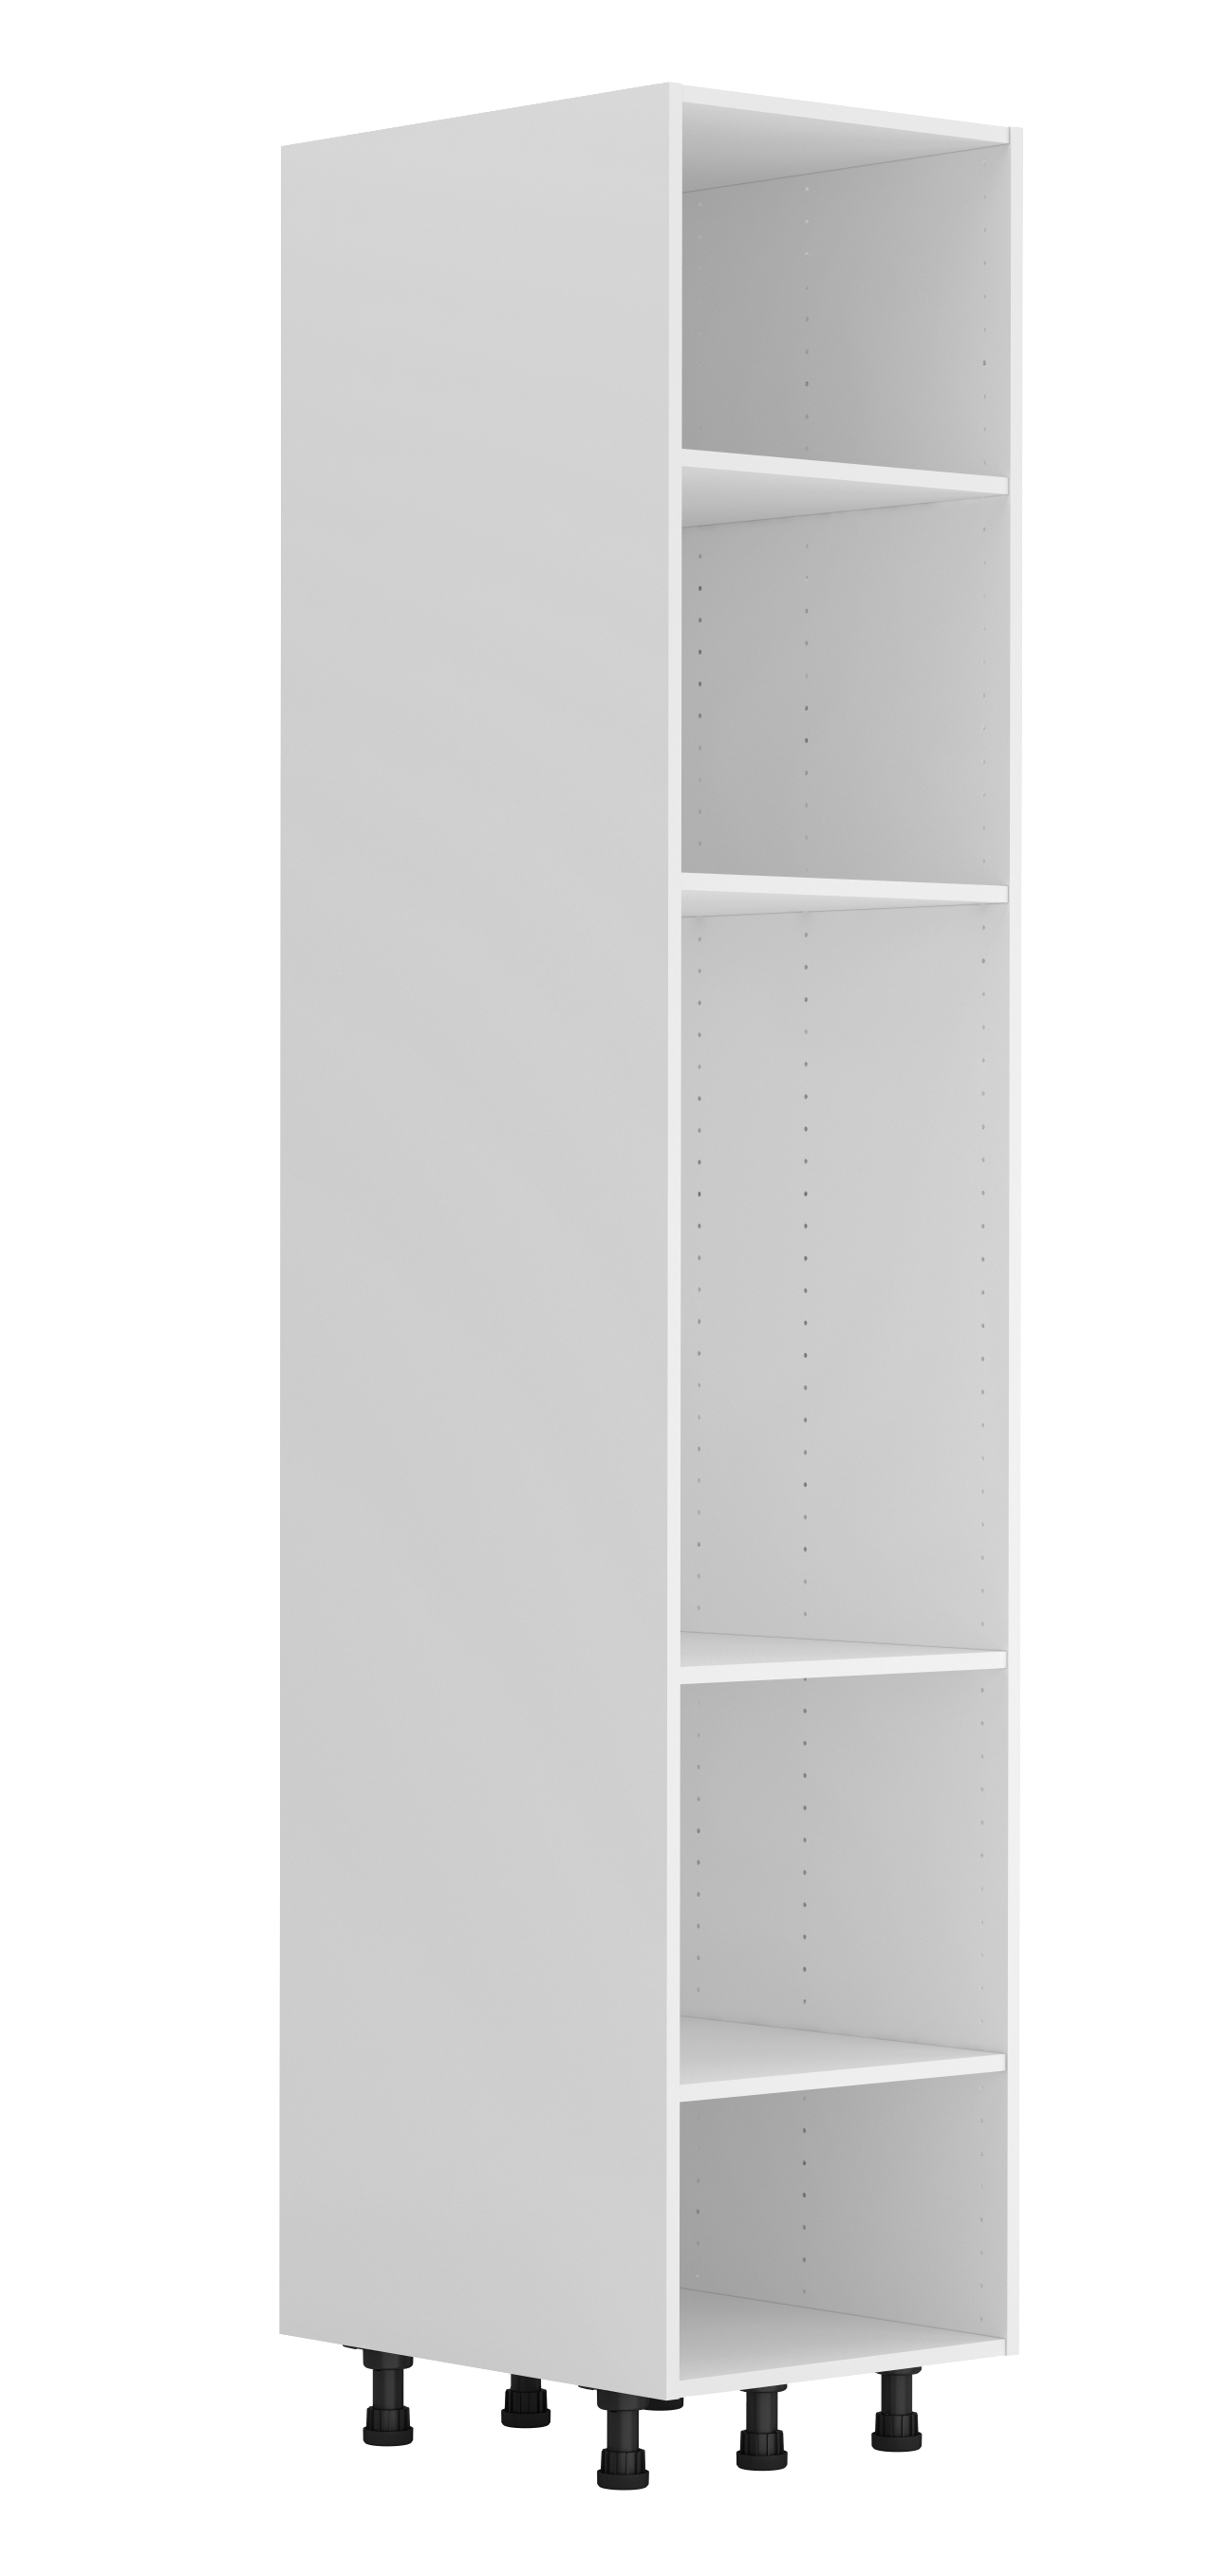 Mueble columna blanco delinia id 45x214,4 cm